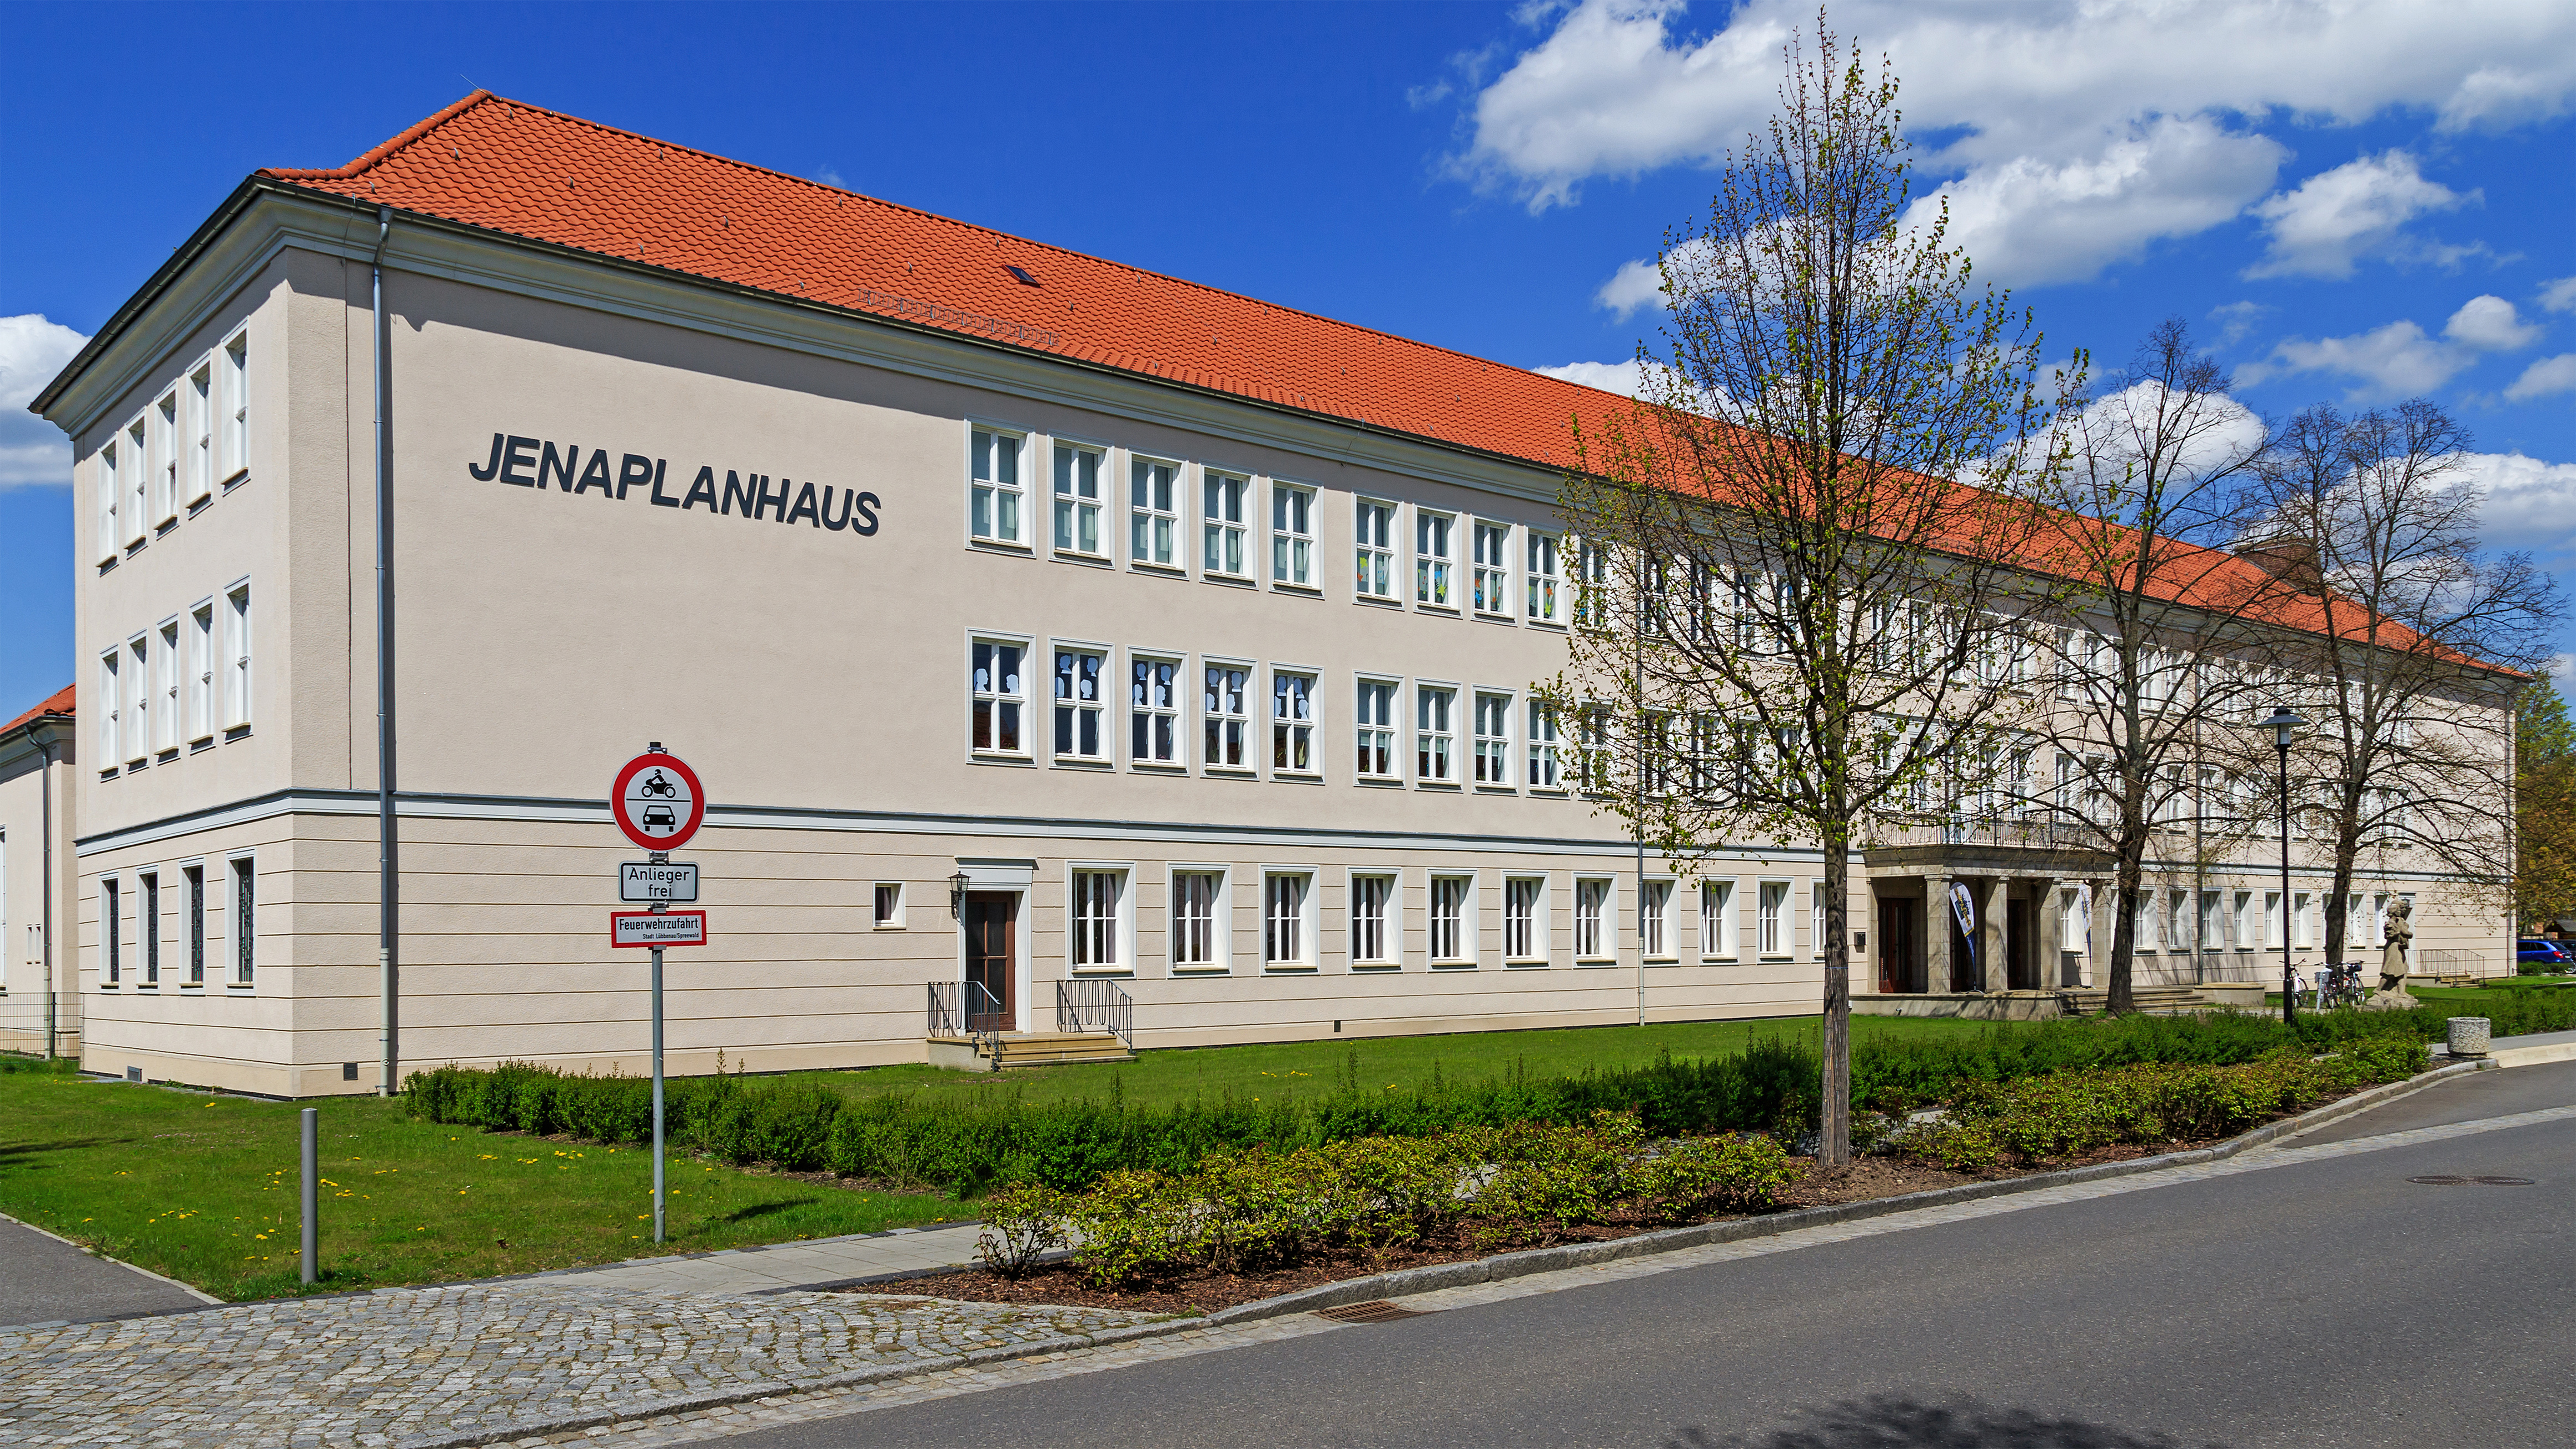 Jenaplanhaus in Lübbenau/Spreewald, Brandenburg, Germany